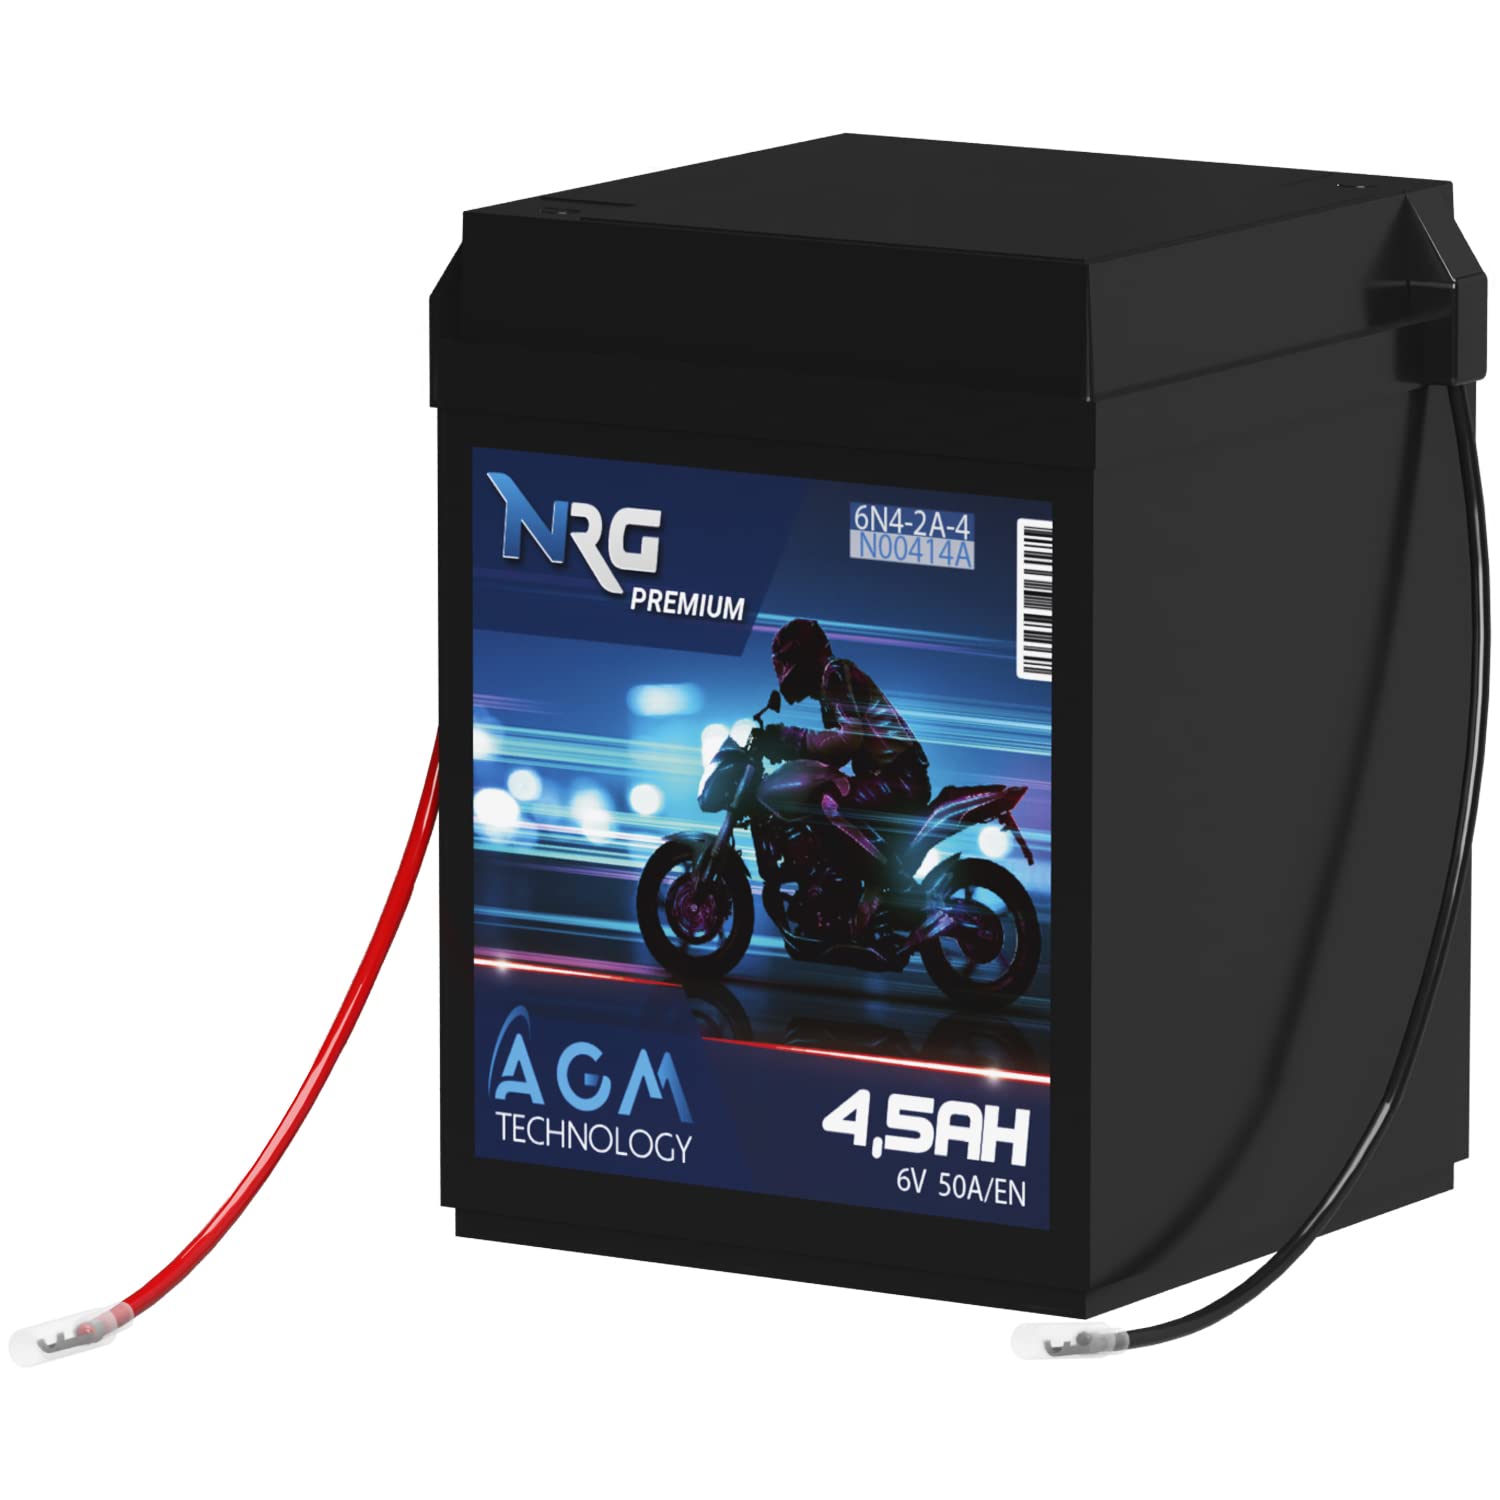 NRG Premium 6N4-2A-4 AGM Roller Batterie 6V 4,5Ah 50A/EN entspricht 00414 6N4-2A-7 Motorradbatterie auslaufsicher ersetzt 4Ah von NRG PREMIUM